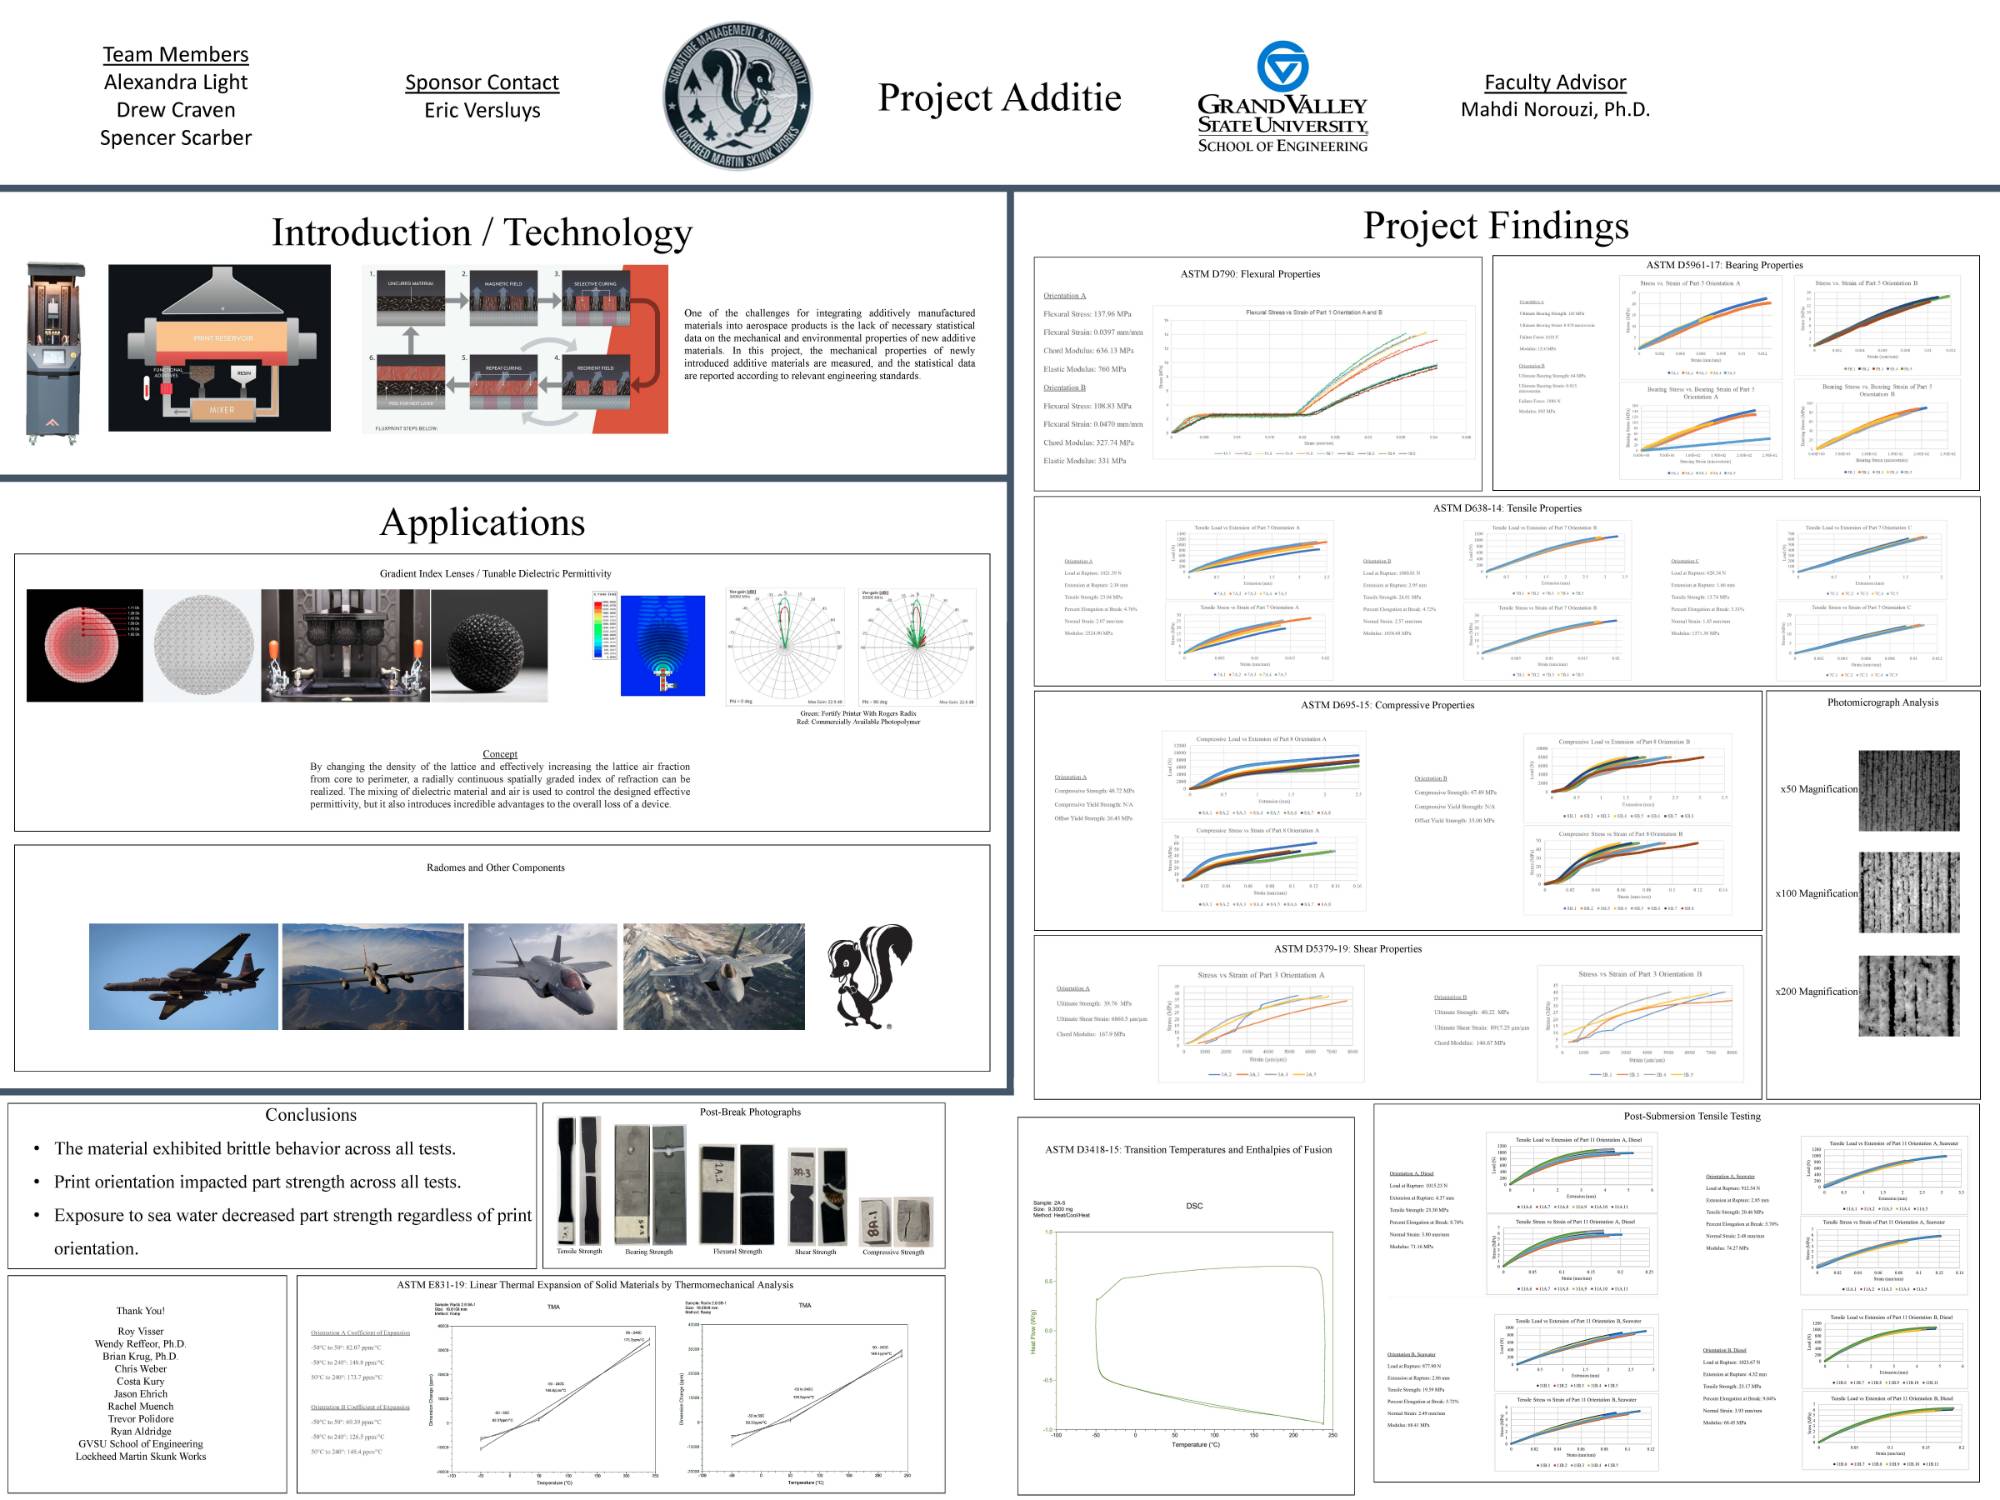 Project presentation of Lockheed Martin's senior design project